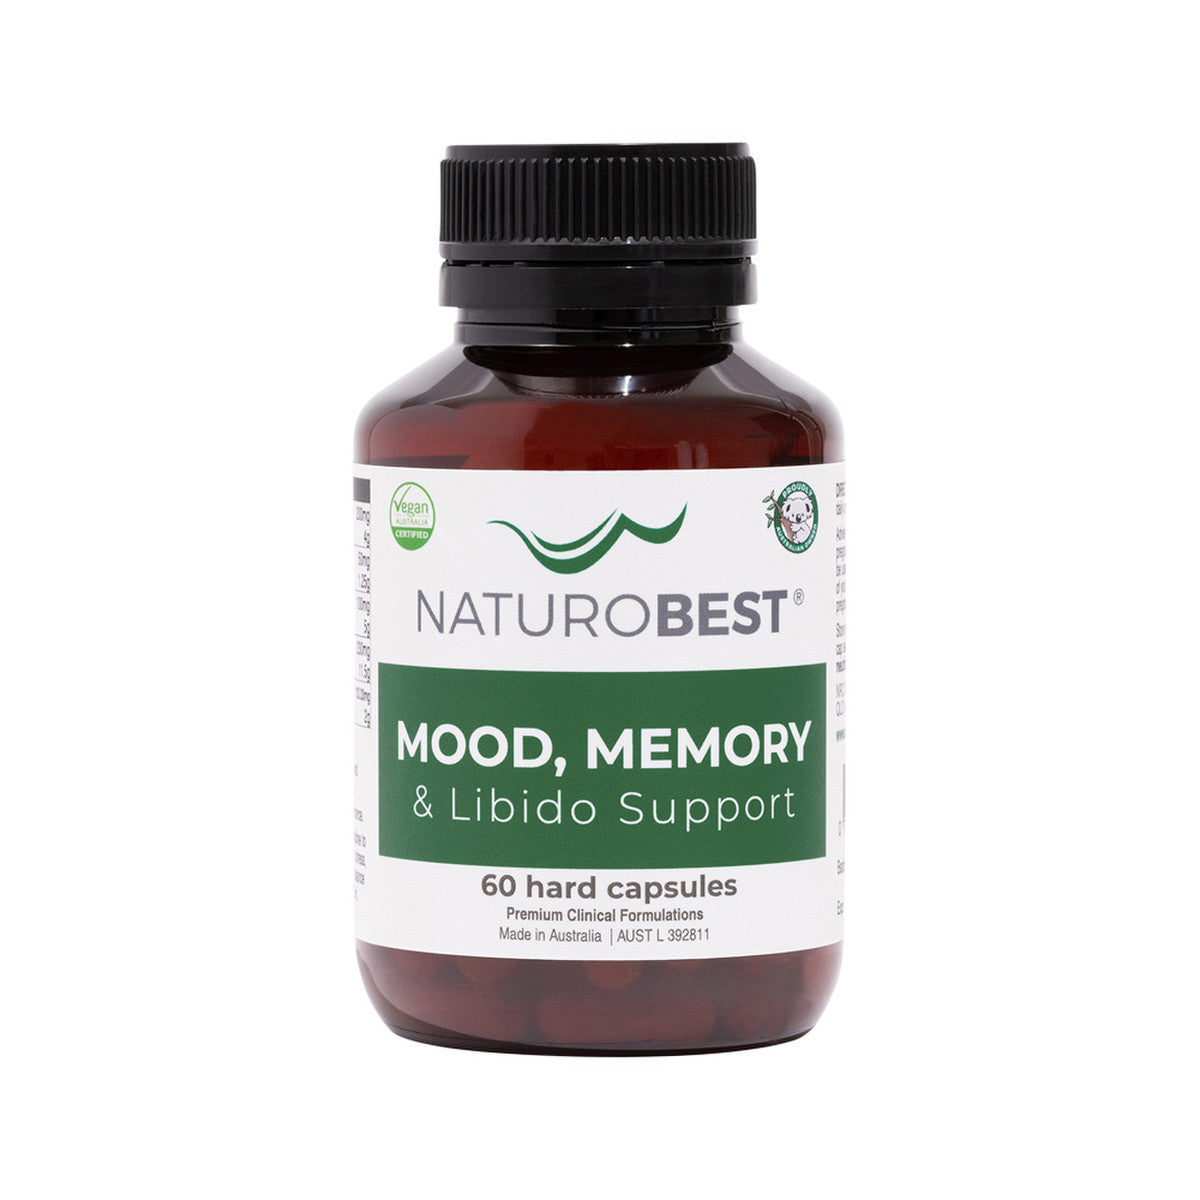 NaturoBest - Mood, Memory & Libido Support